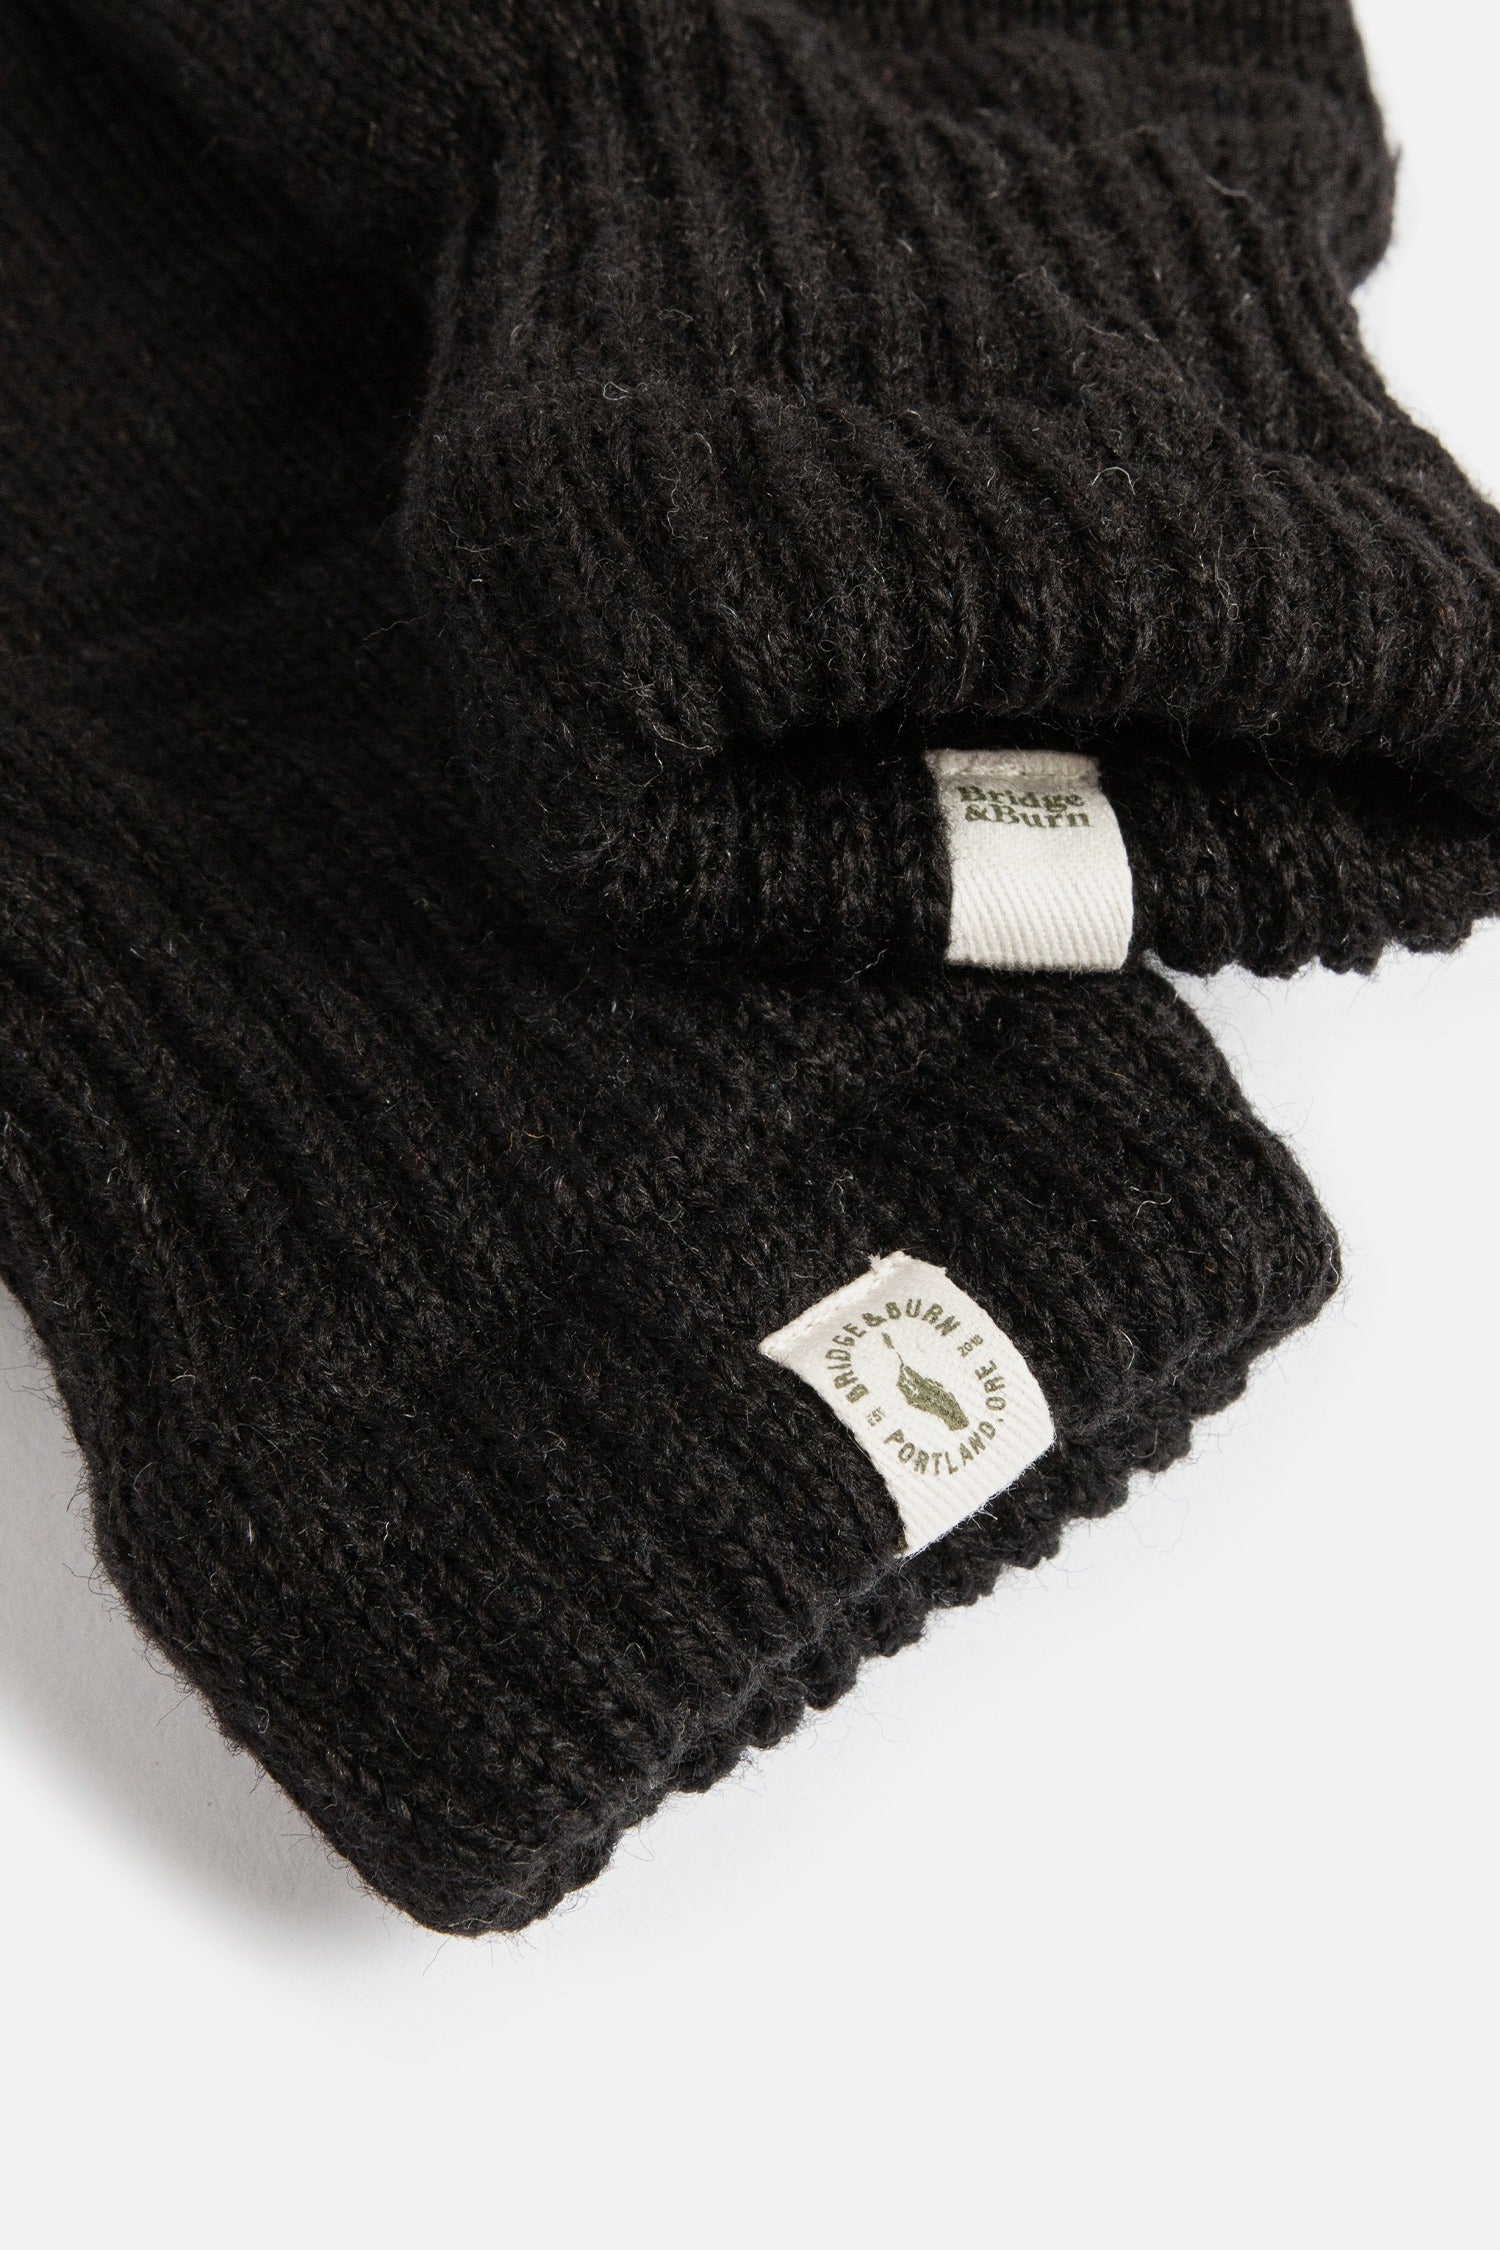 Ragg Wool Lined Glove / Black